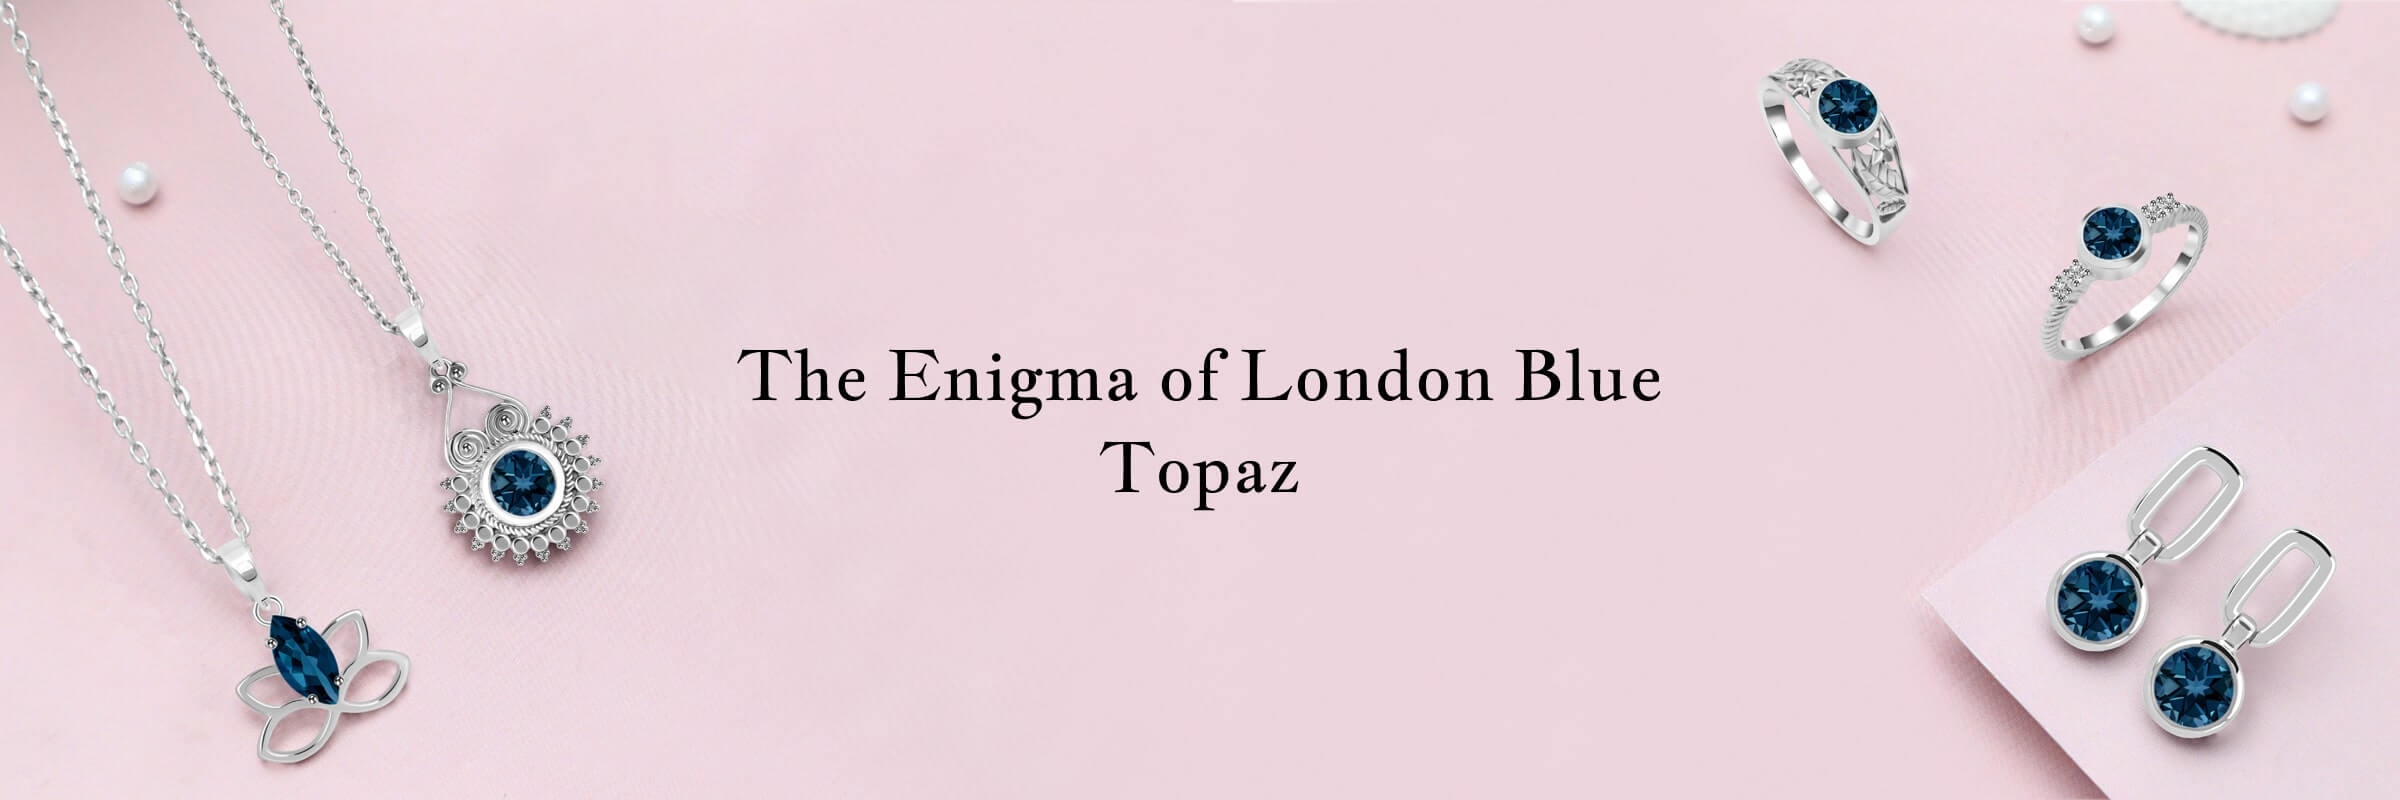 London Blue Topaz Physical Properties